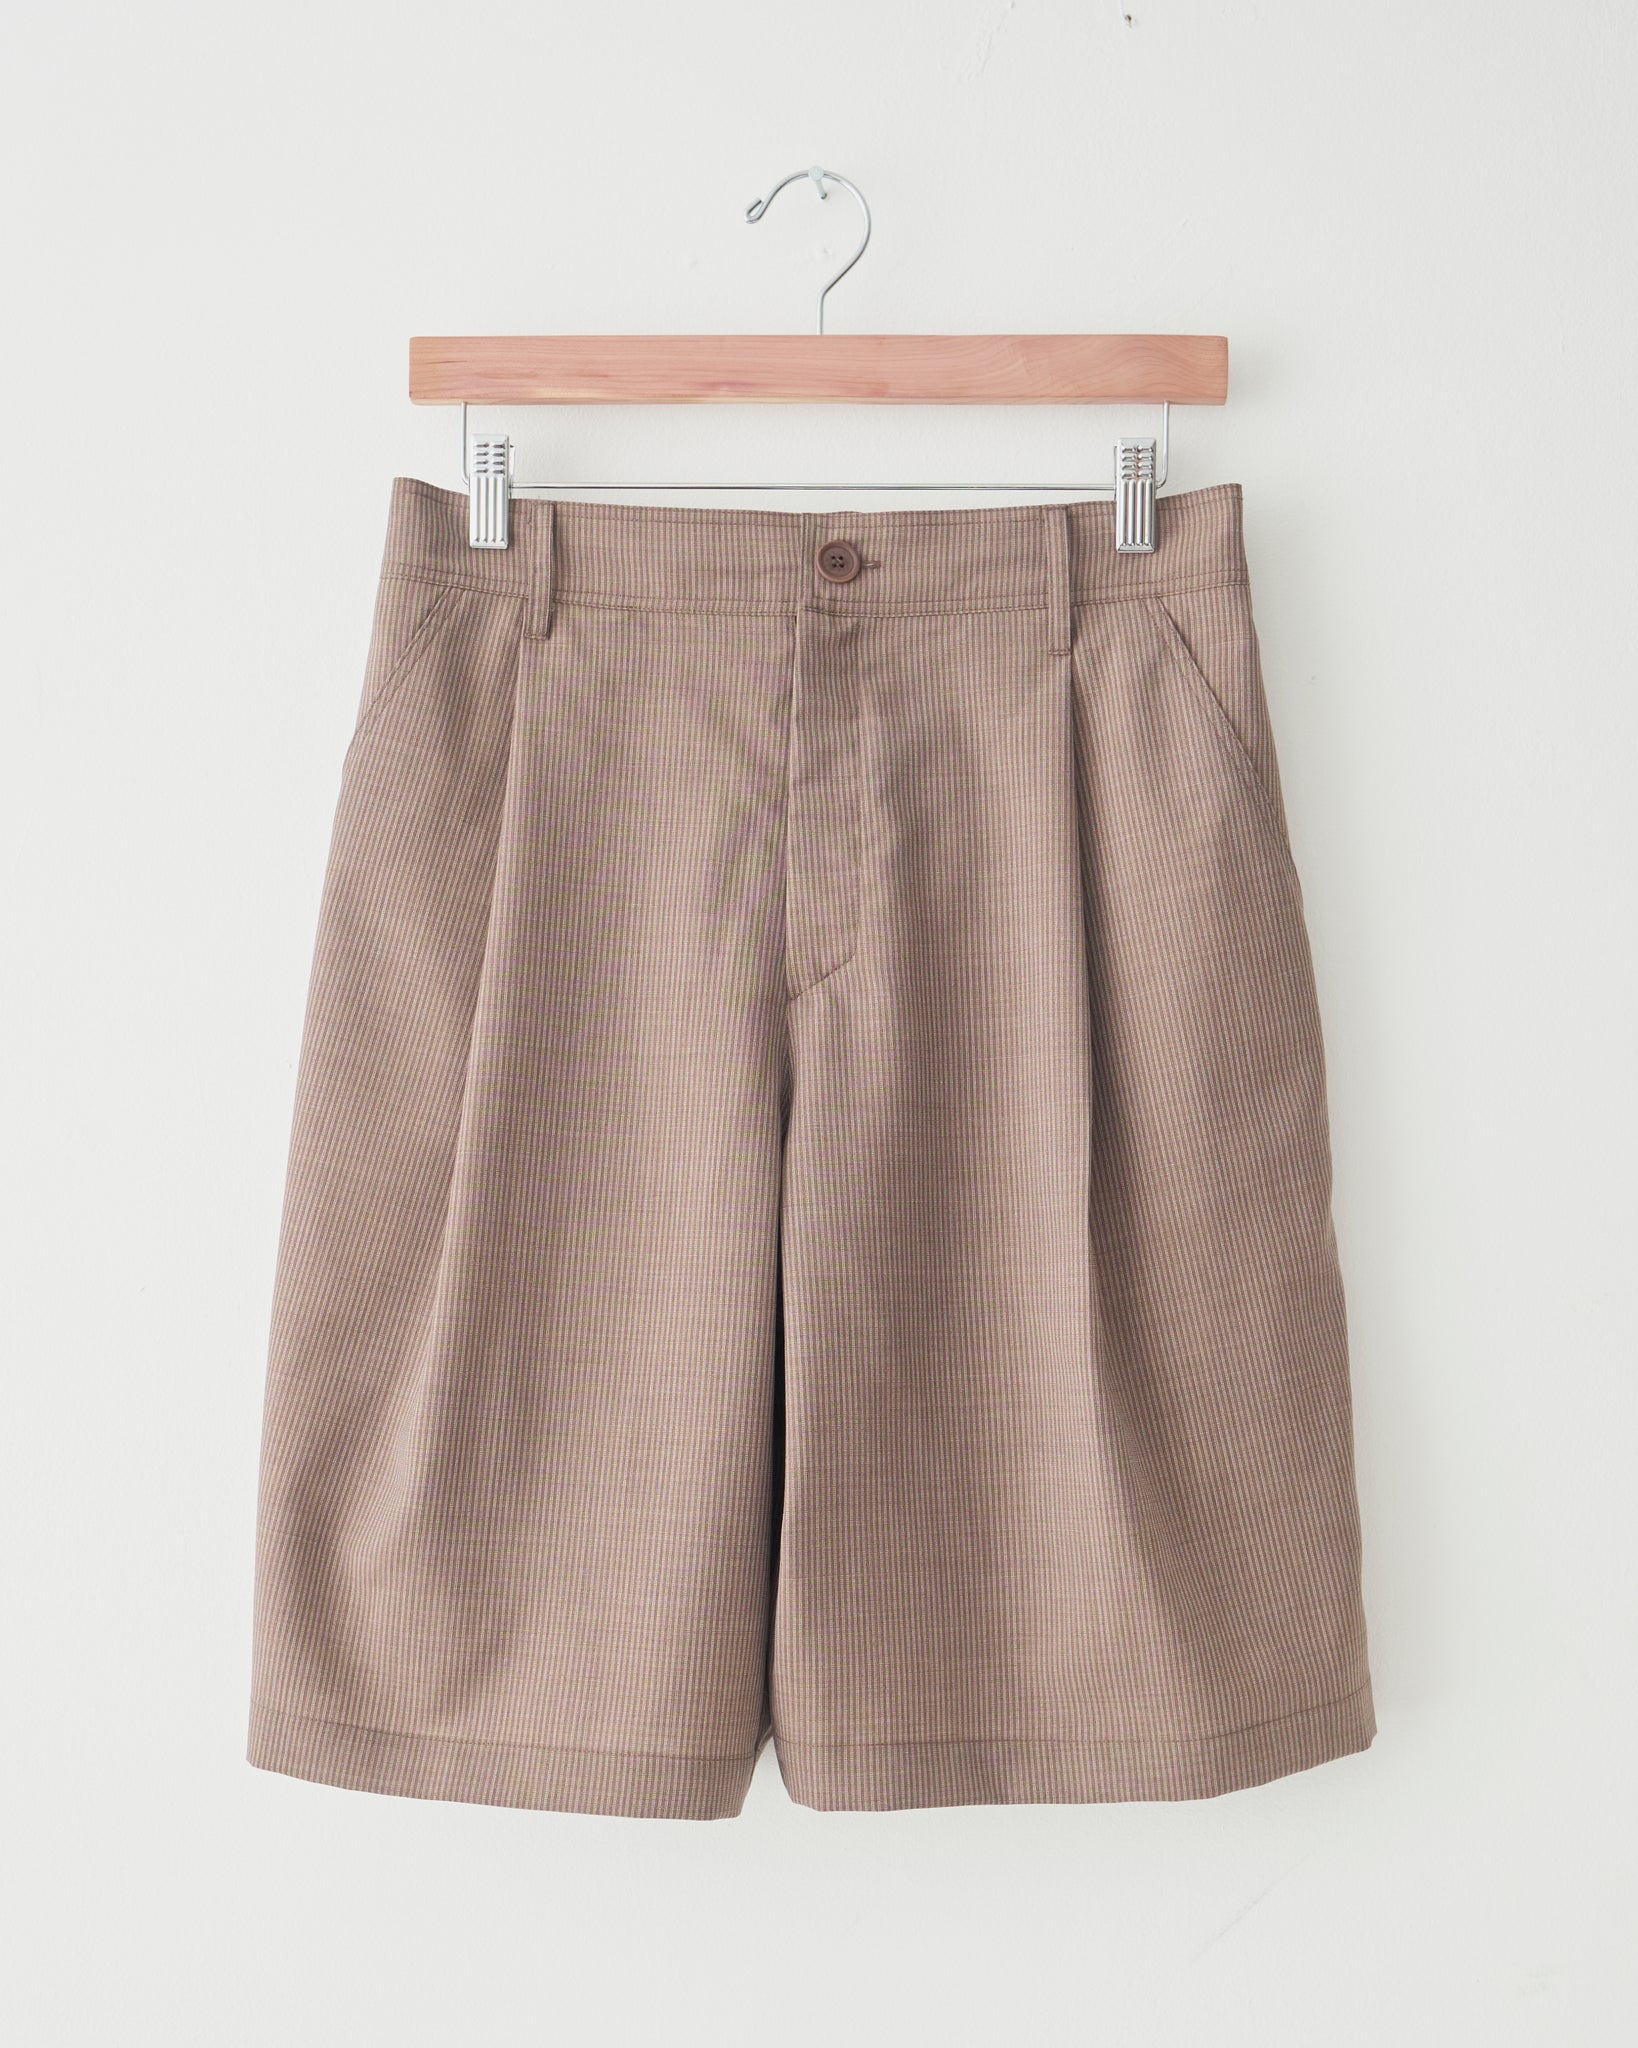 Single Pleat Shorts, Striped